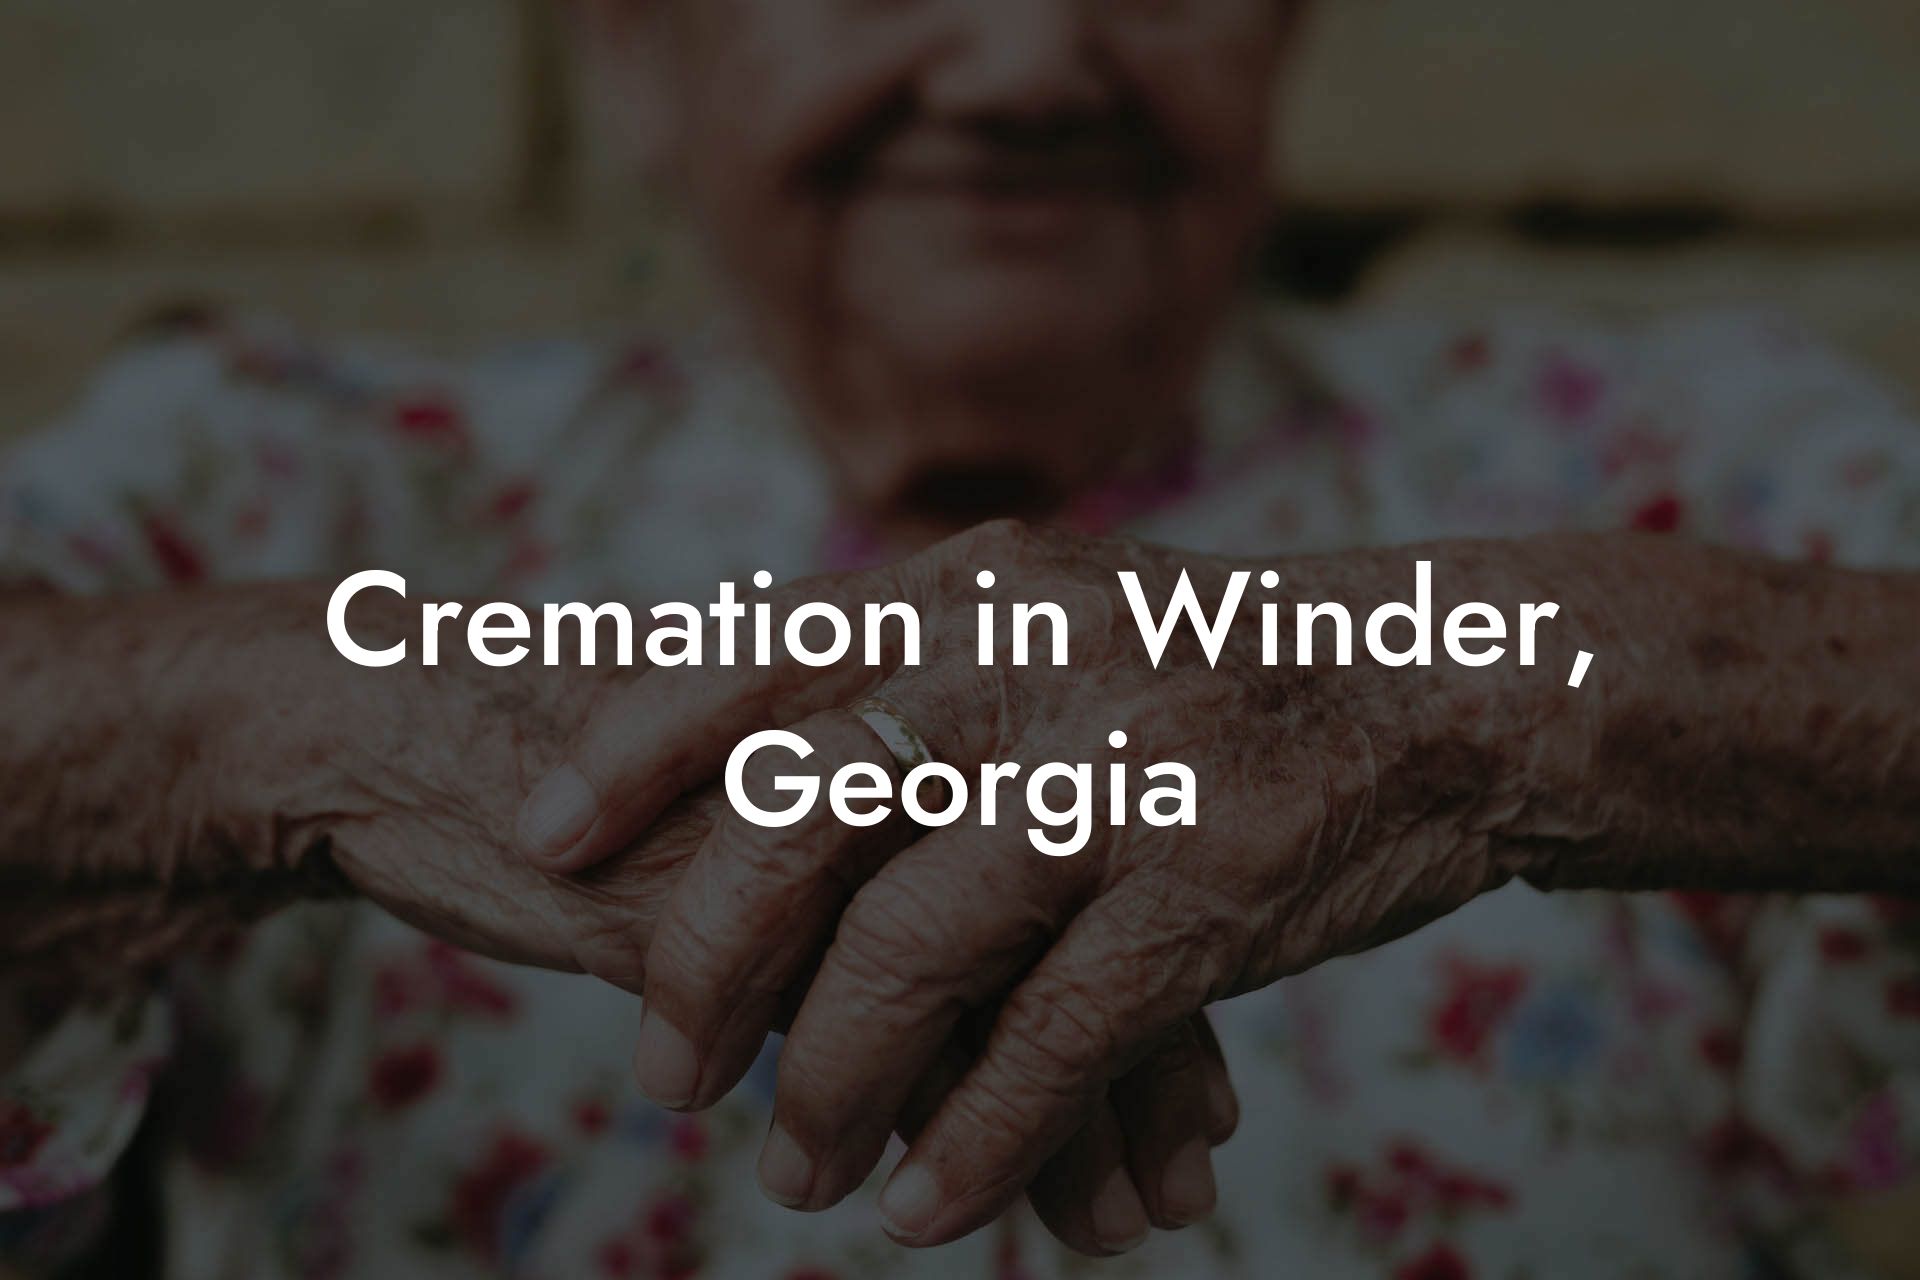 Cremation in Winder, Georgia